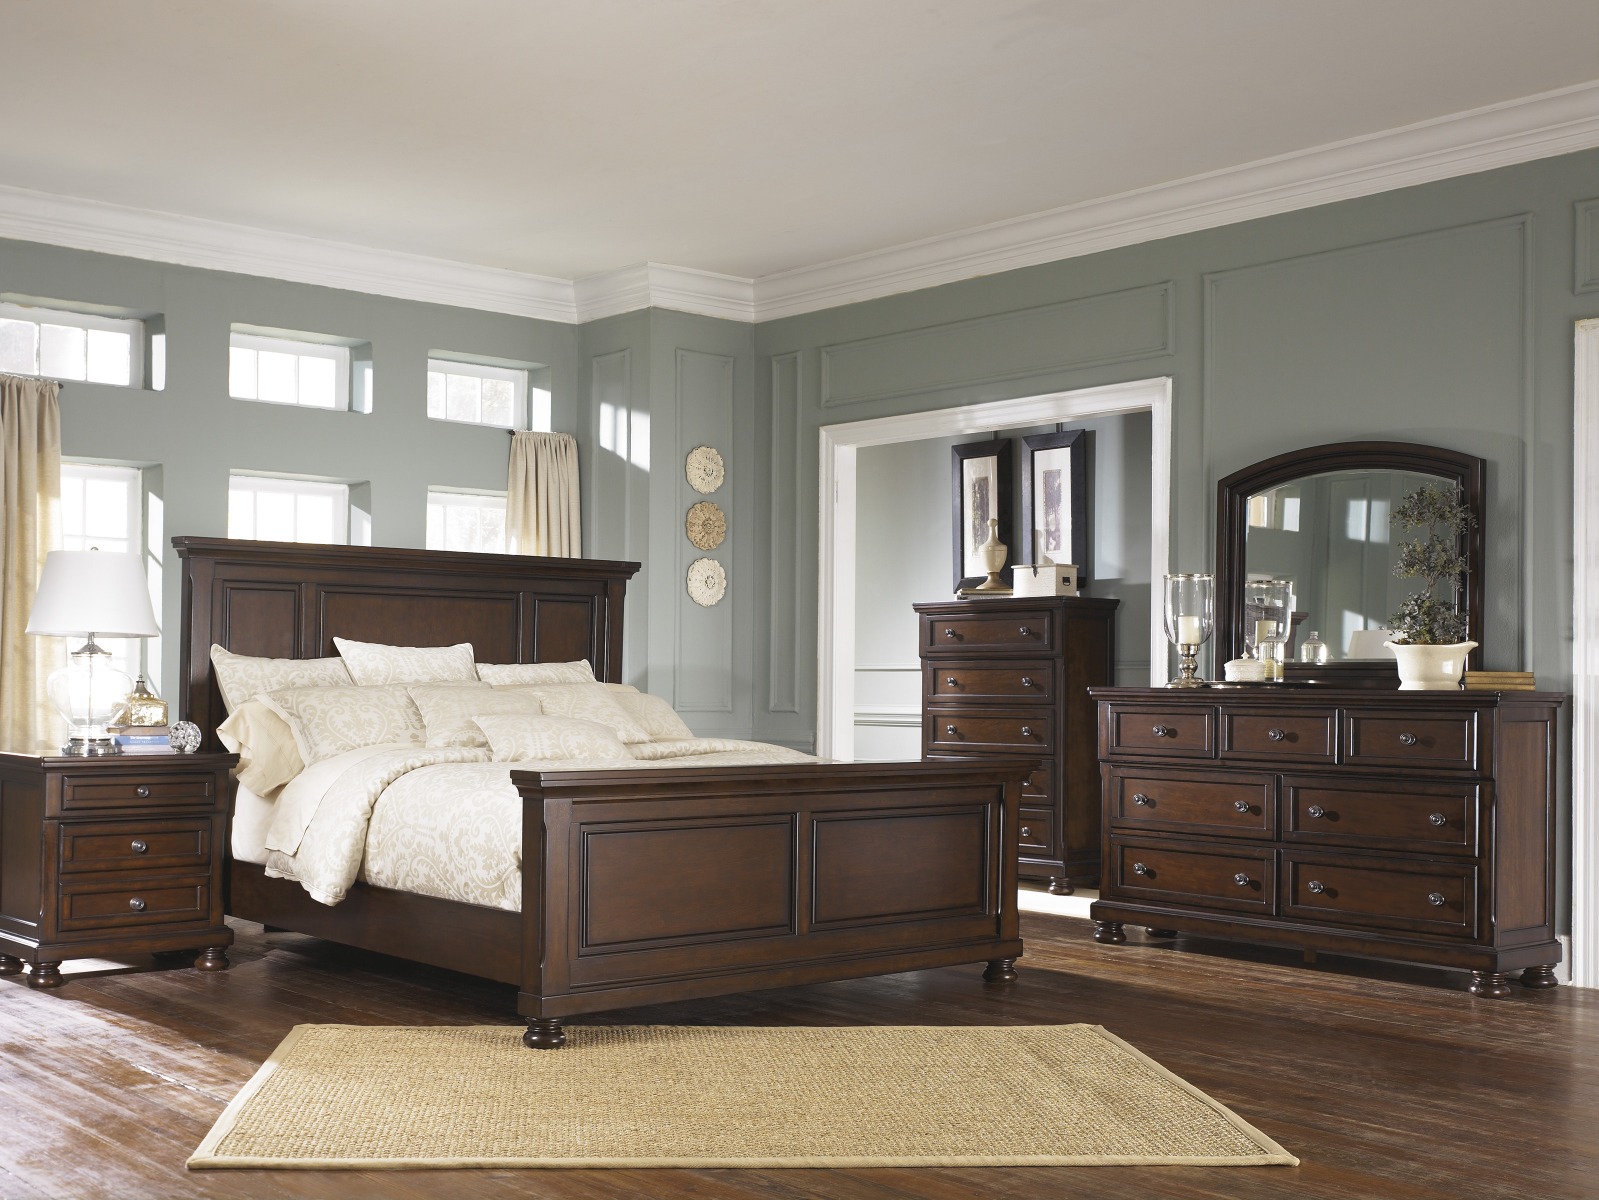 Sypialnia z drewna klasyczna 697